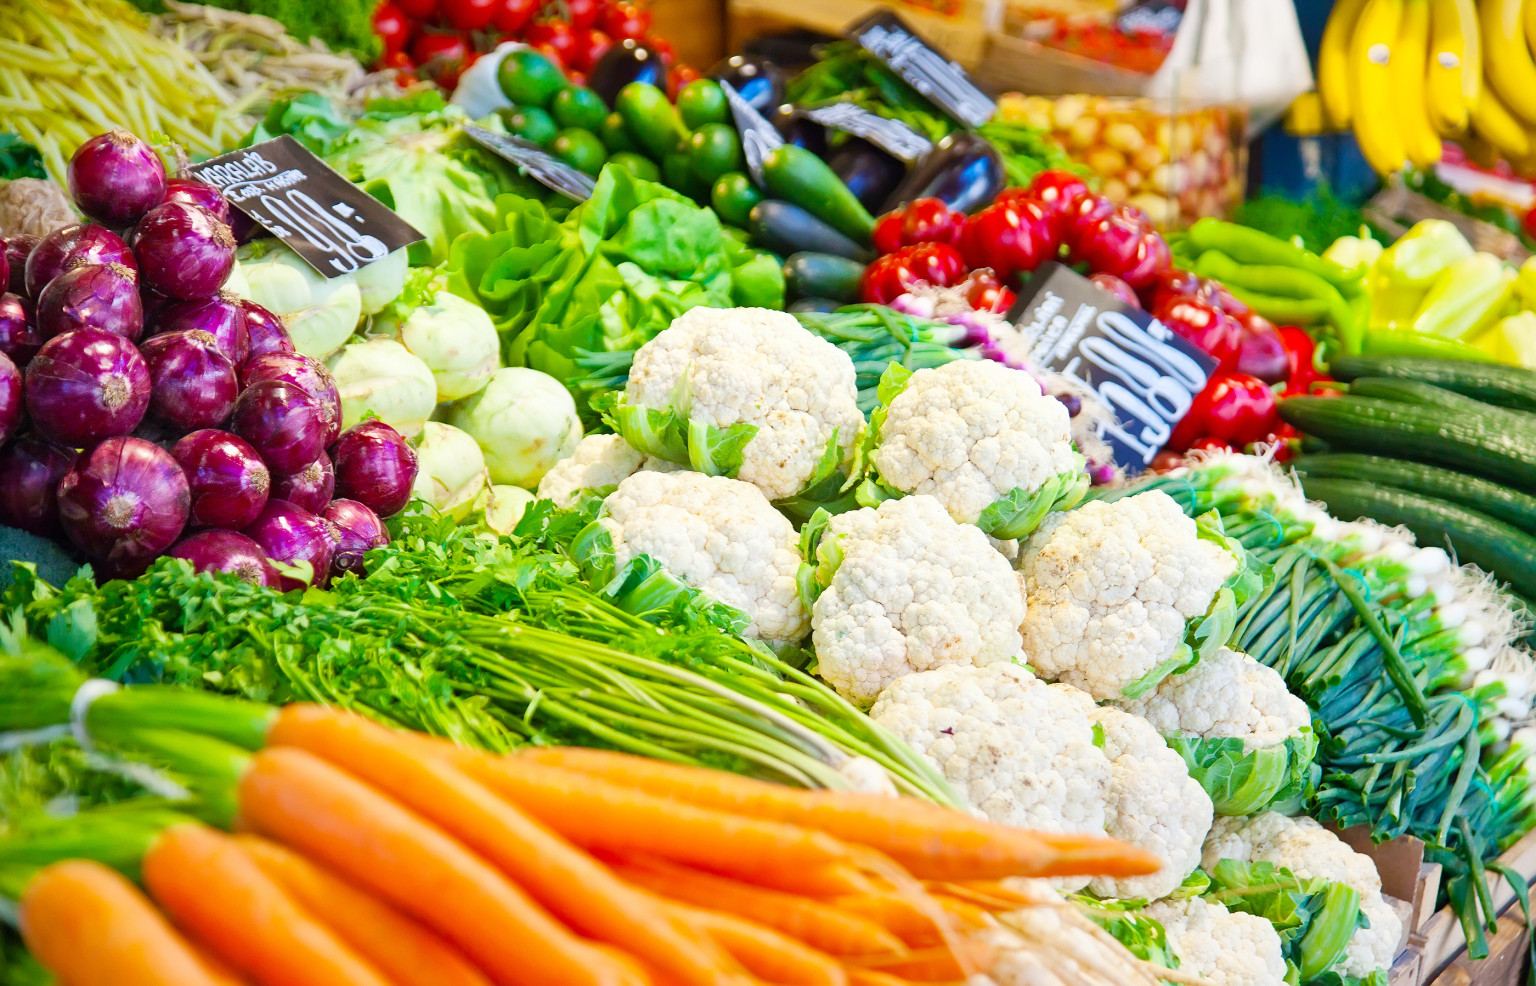 Azerbaijan boosts export of fruits, vegetables in 1Q2022